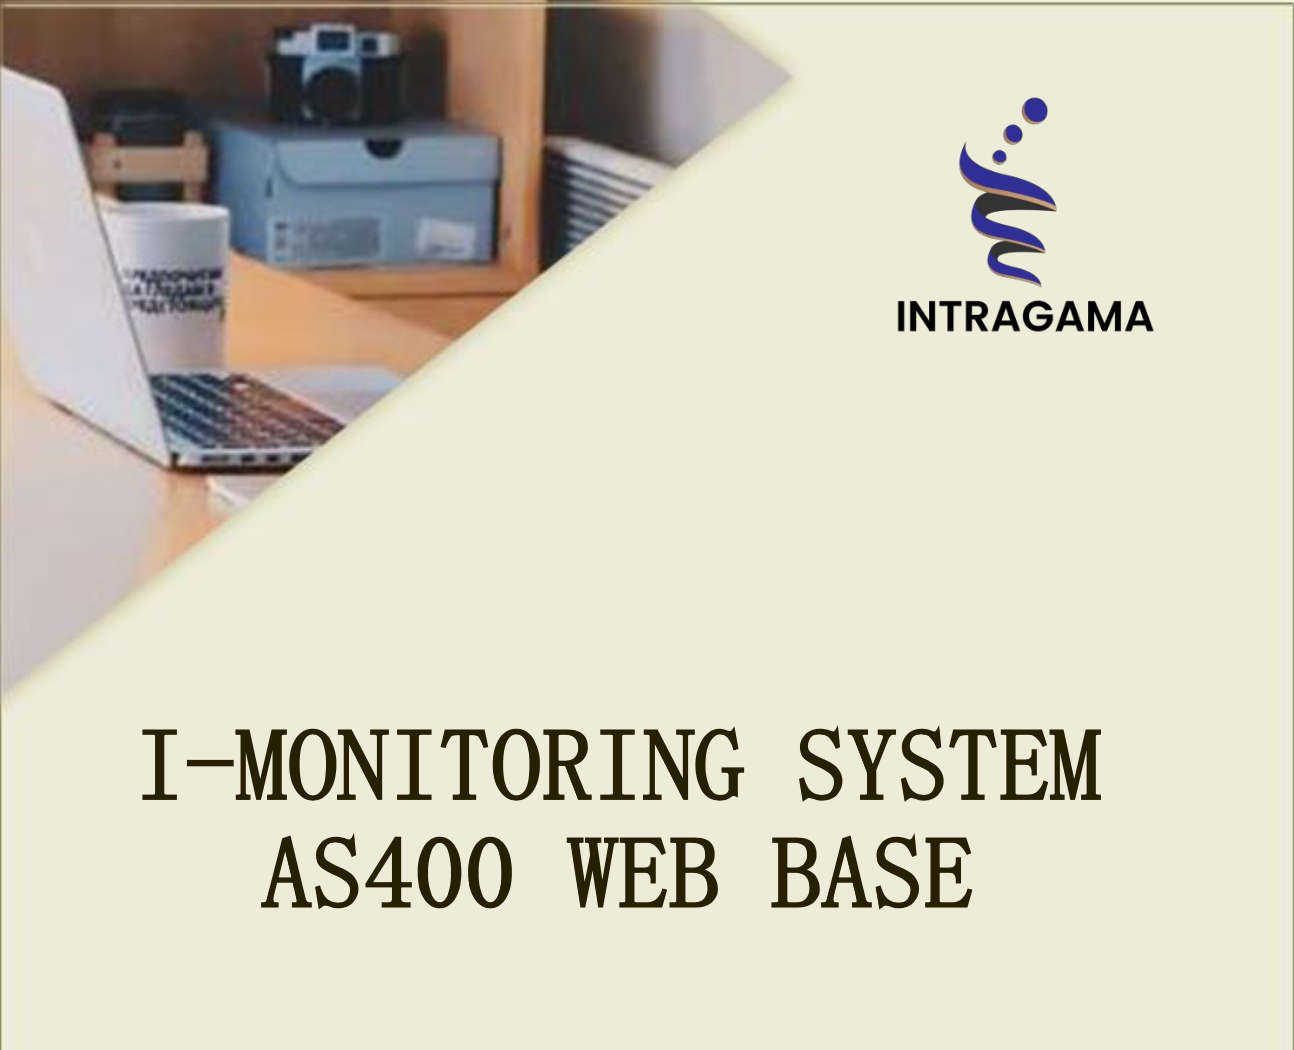 Aplikasi I-Monitorinng System Performance AS400